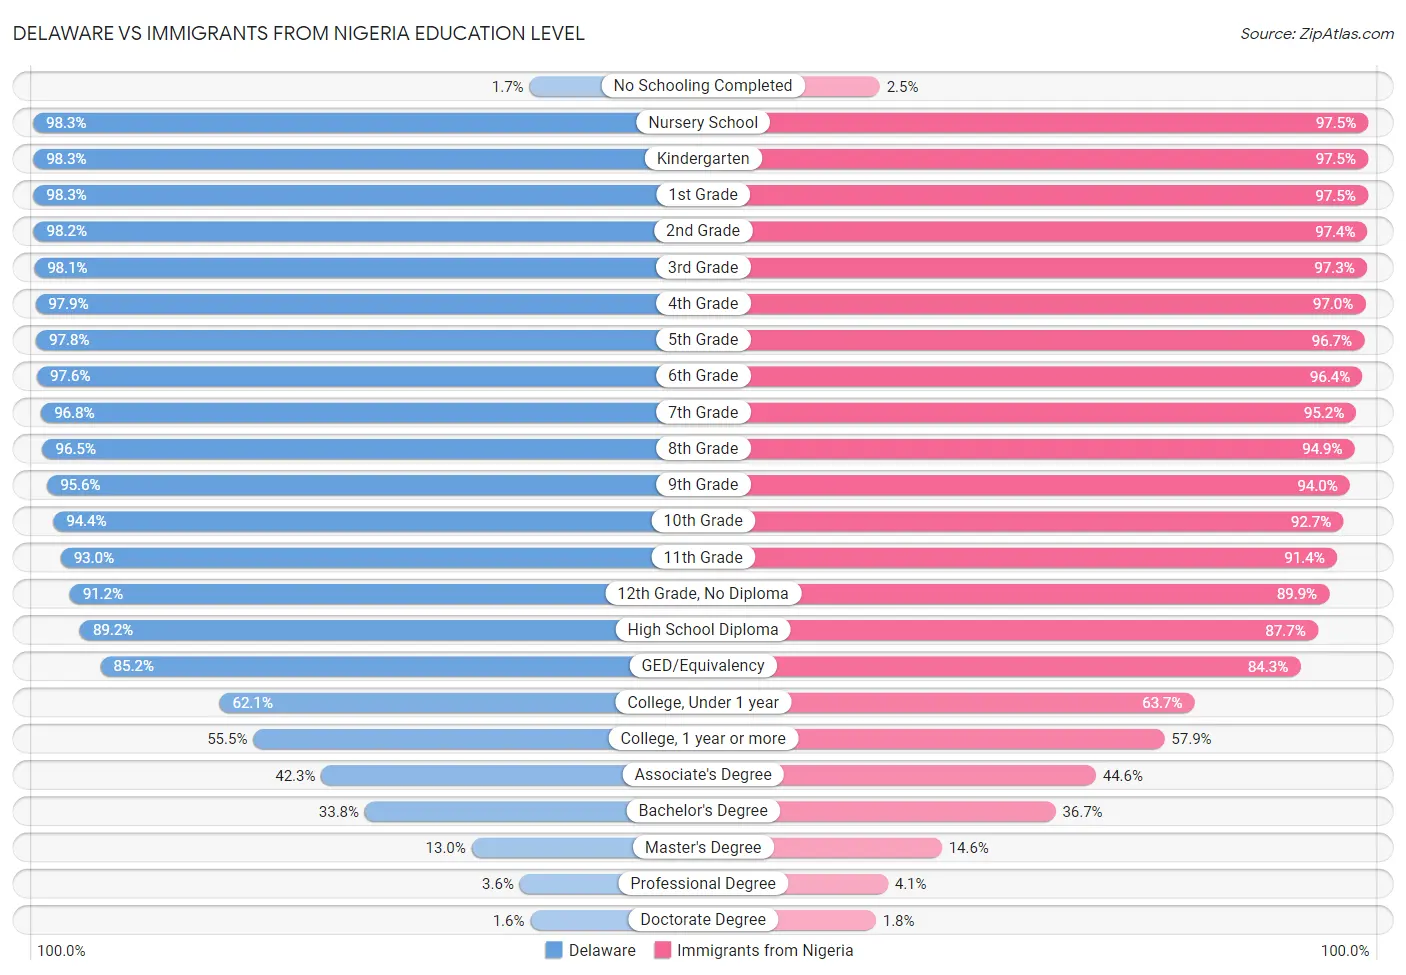 Delaware vs Immigrants from Nigeria Education Level